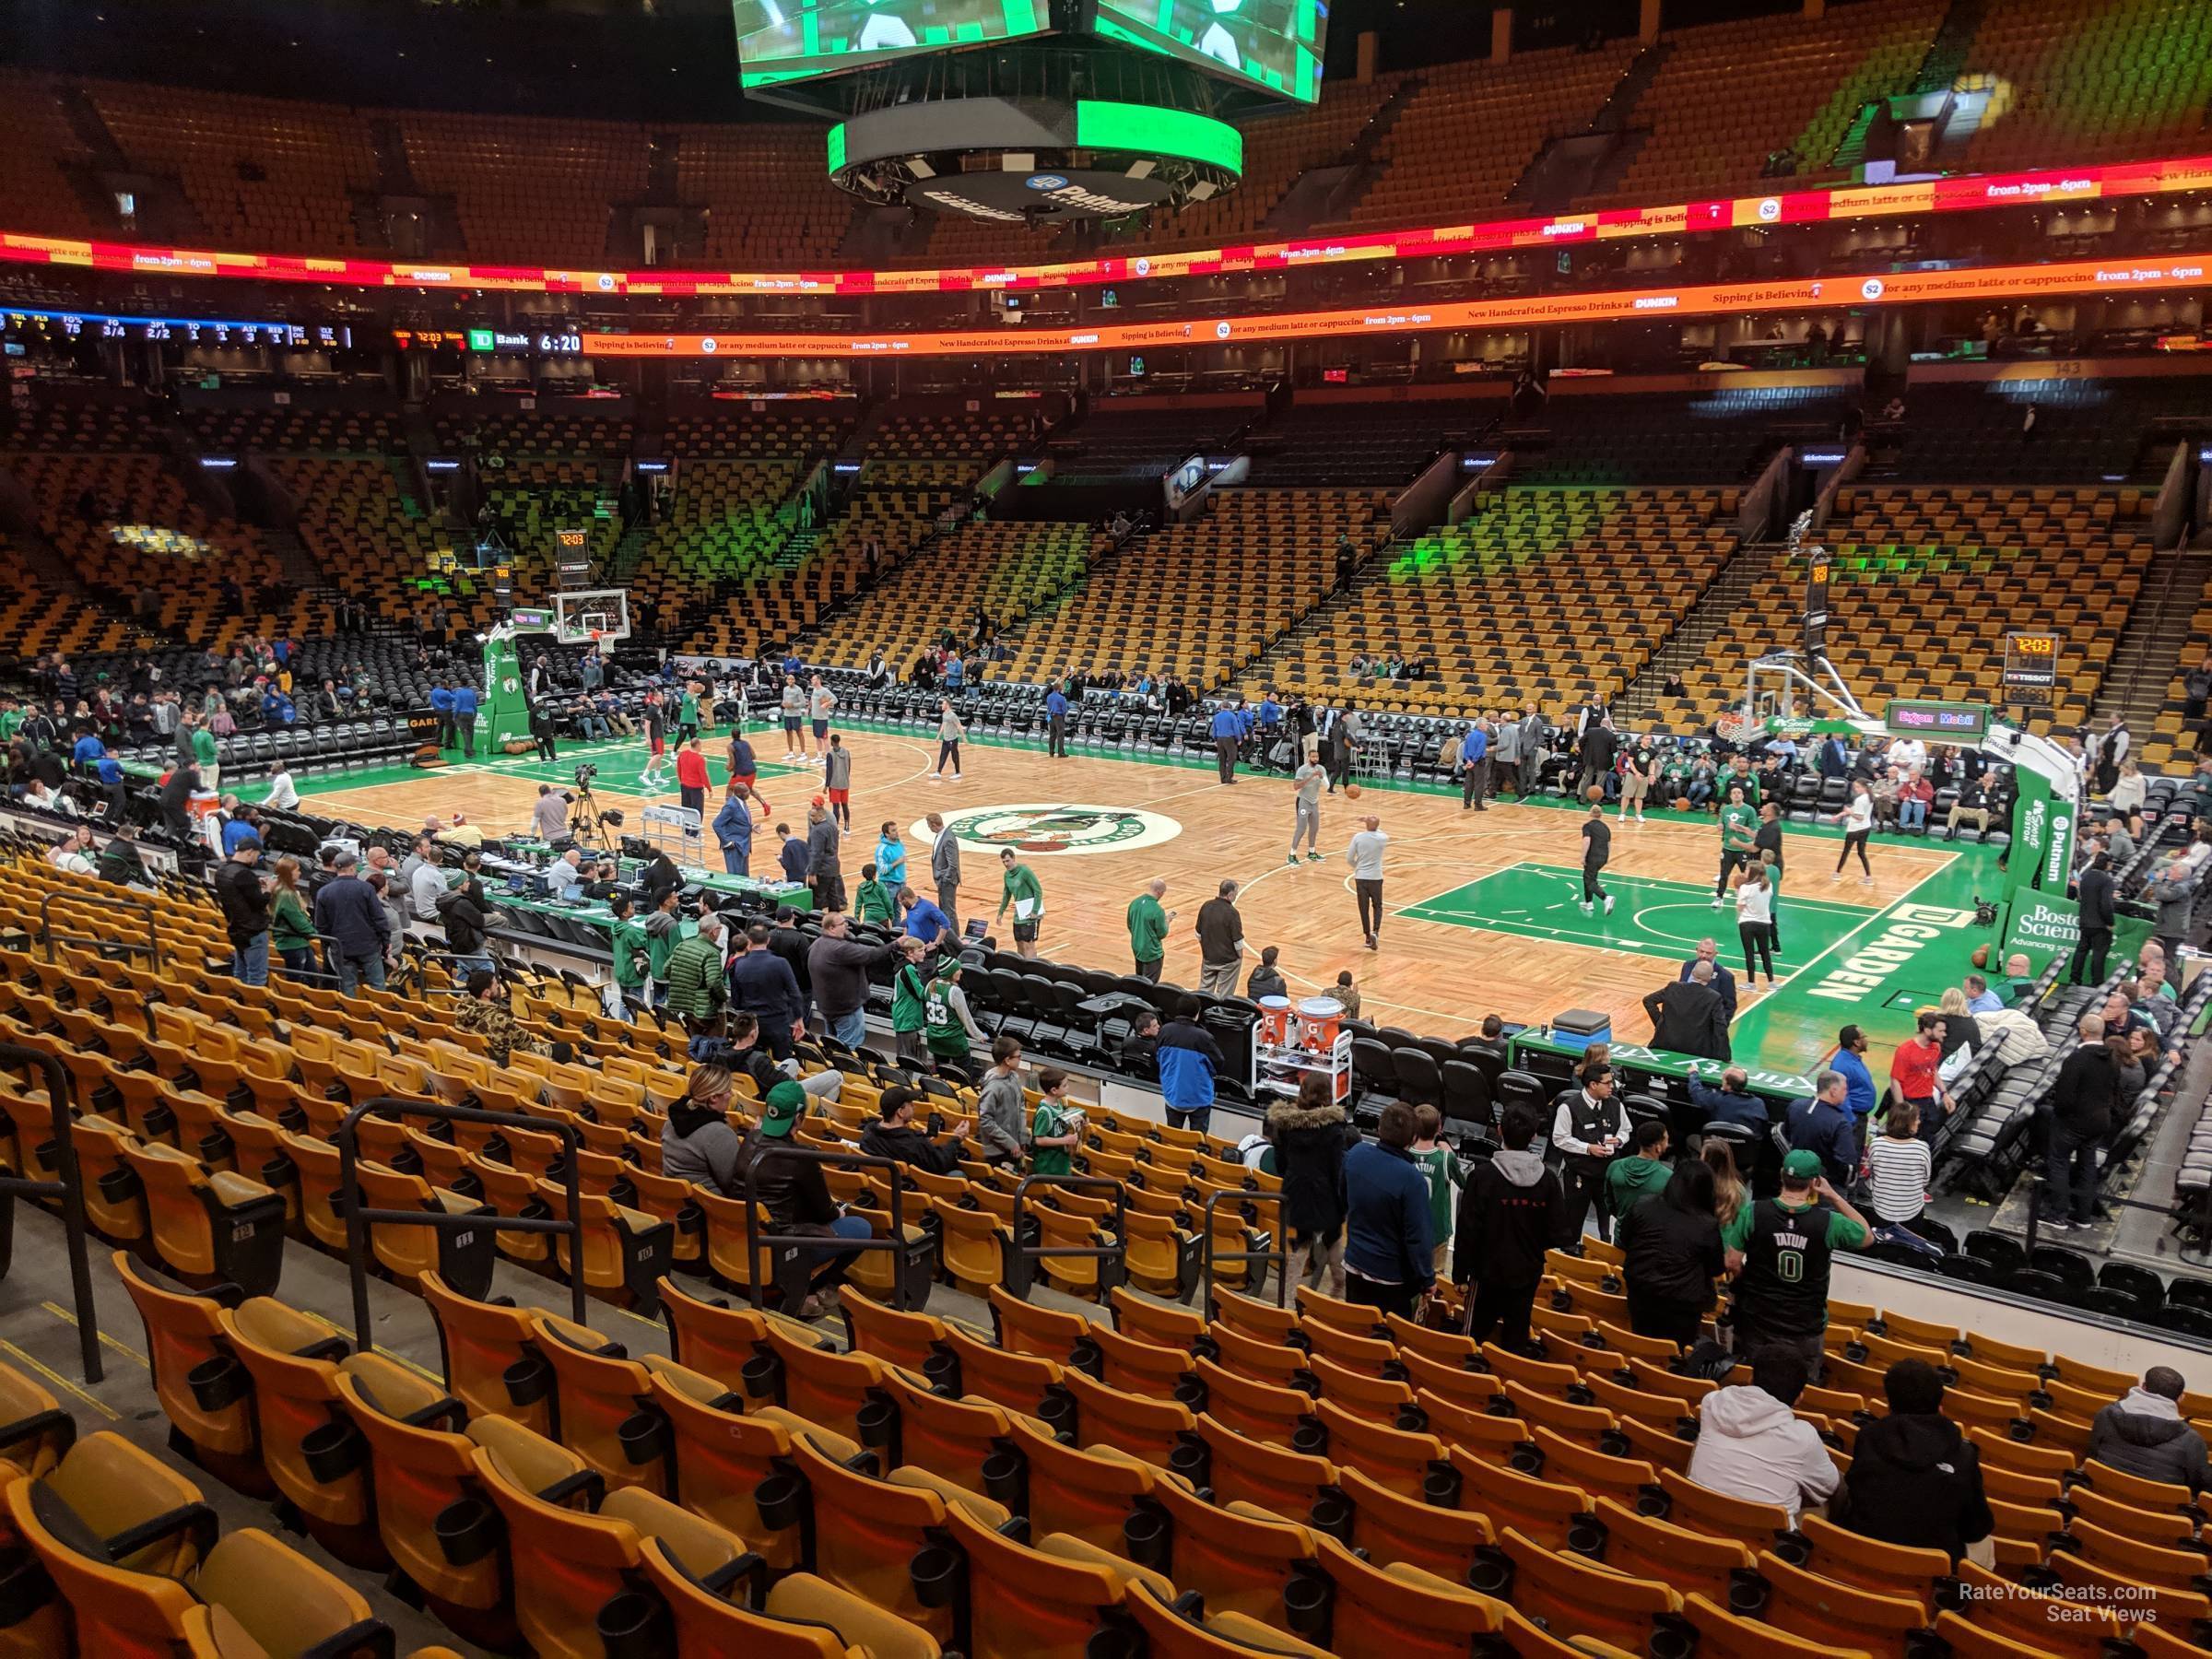 Loge 21 at TD Garden Boston Celtics RateYourSeats com